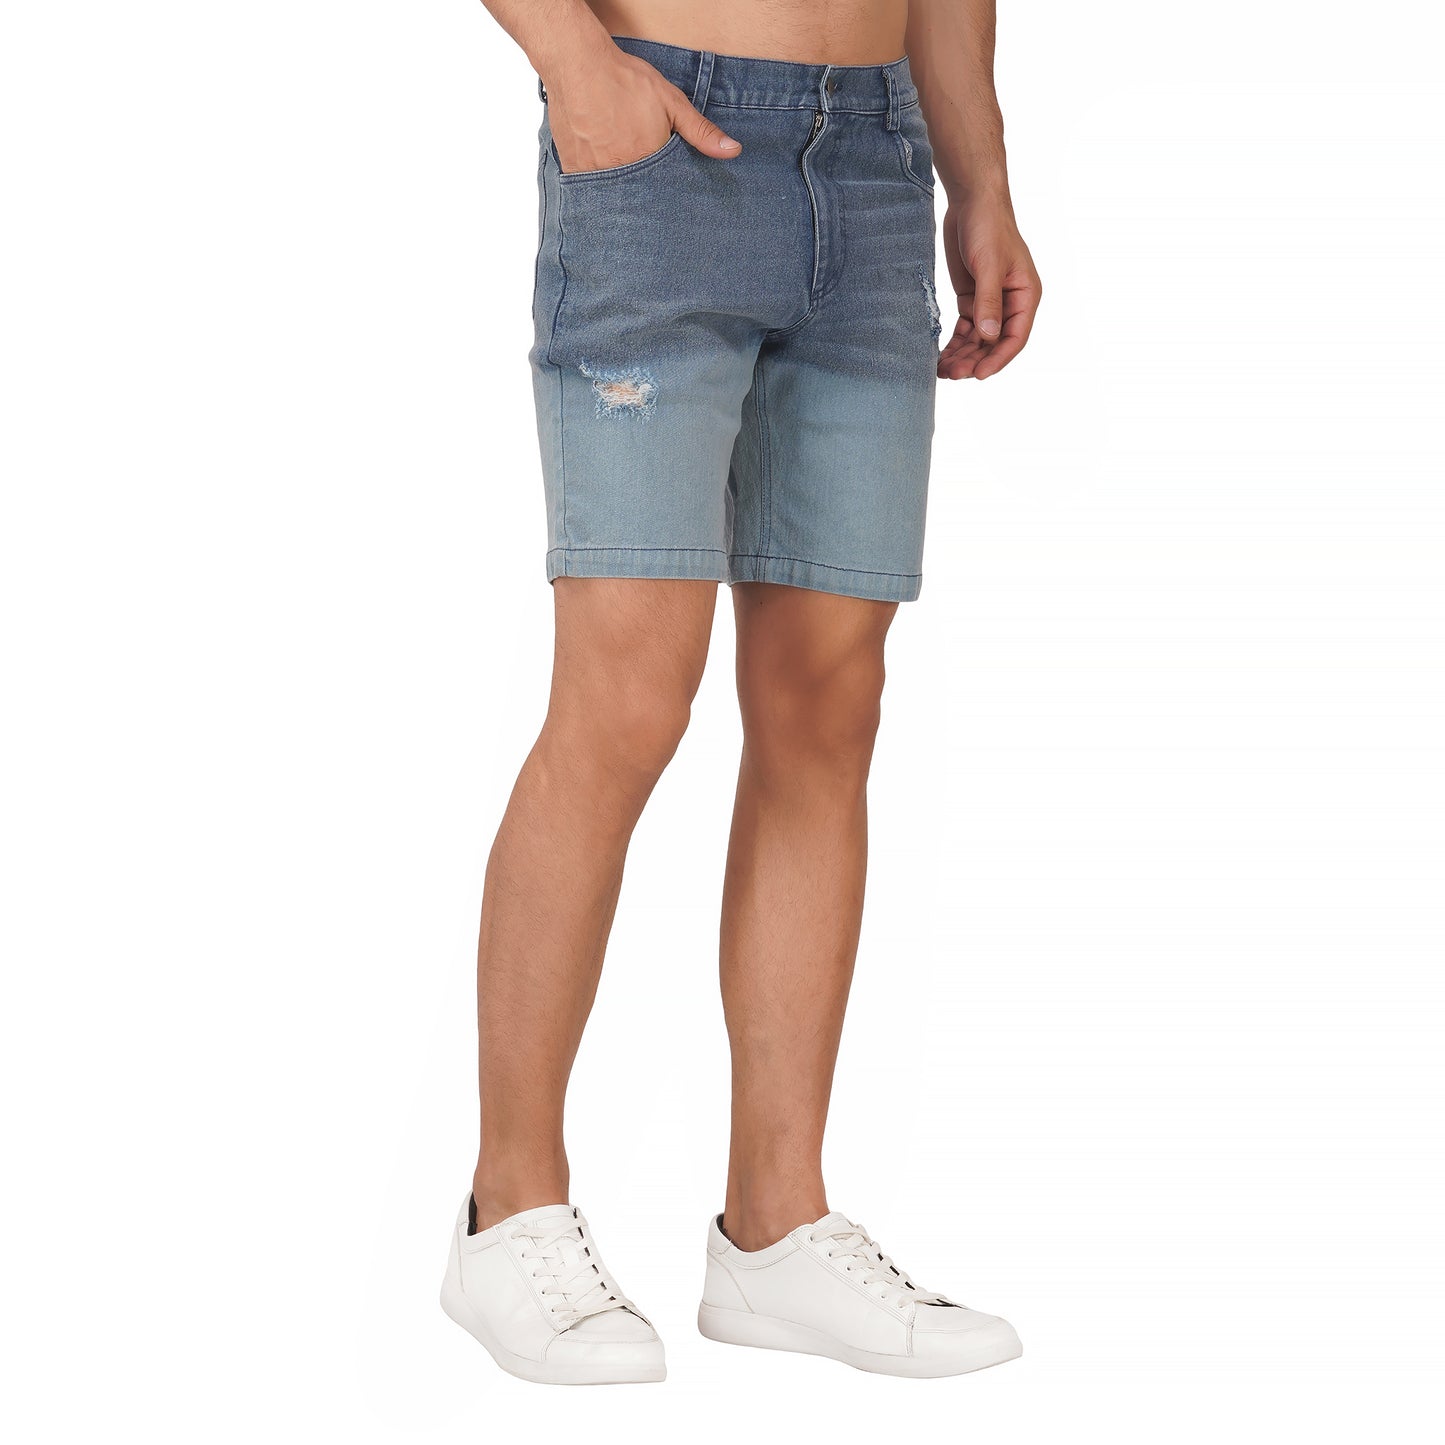 SLAY. Men's Ombre Ripped Denim Shorts